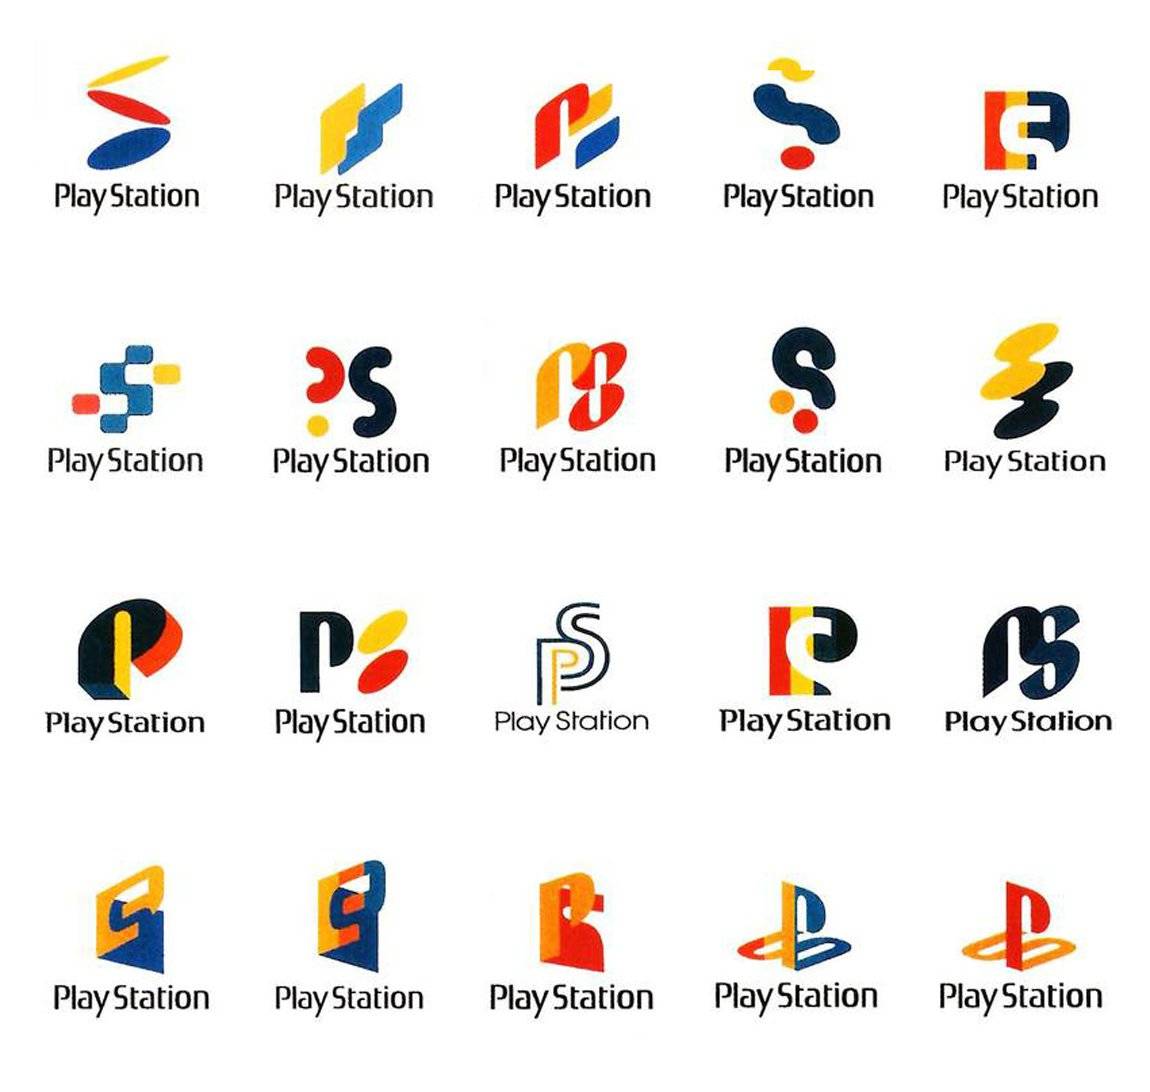 PS Logo - Sony Playstation 1 Logo Design Ideas and Concepts | The Logo Smith